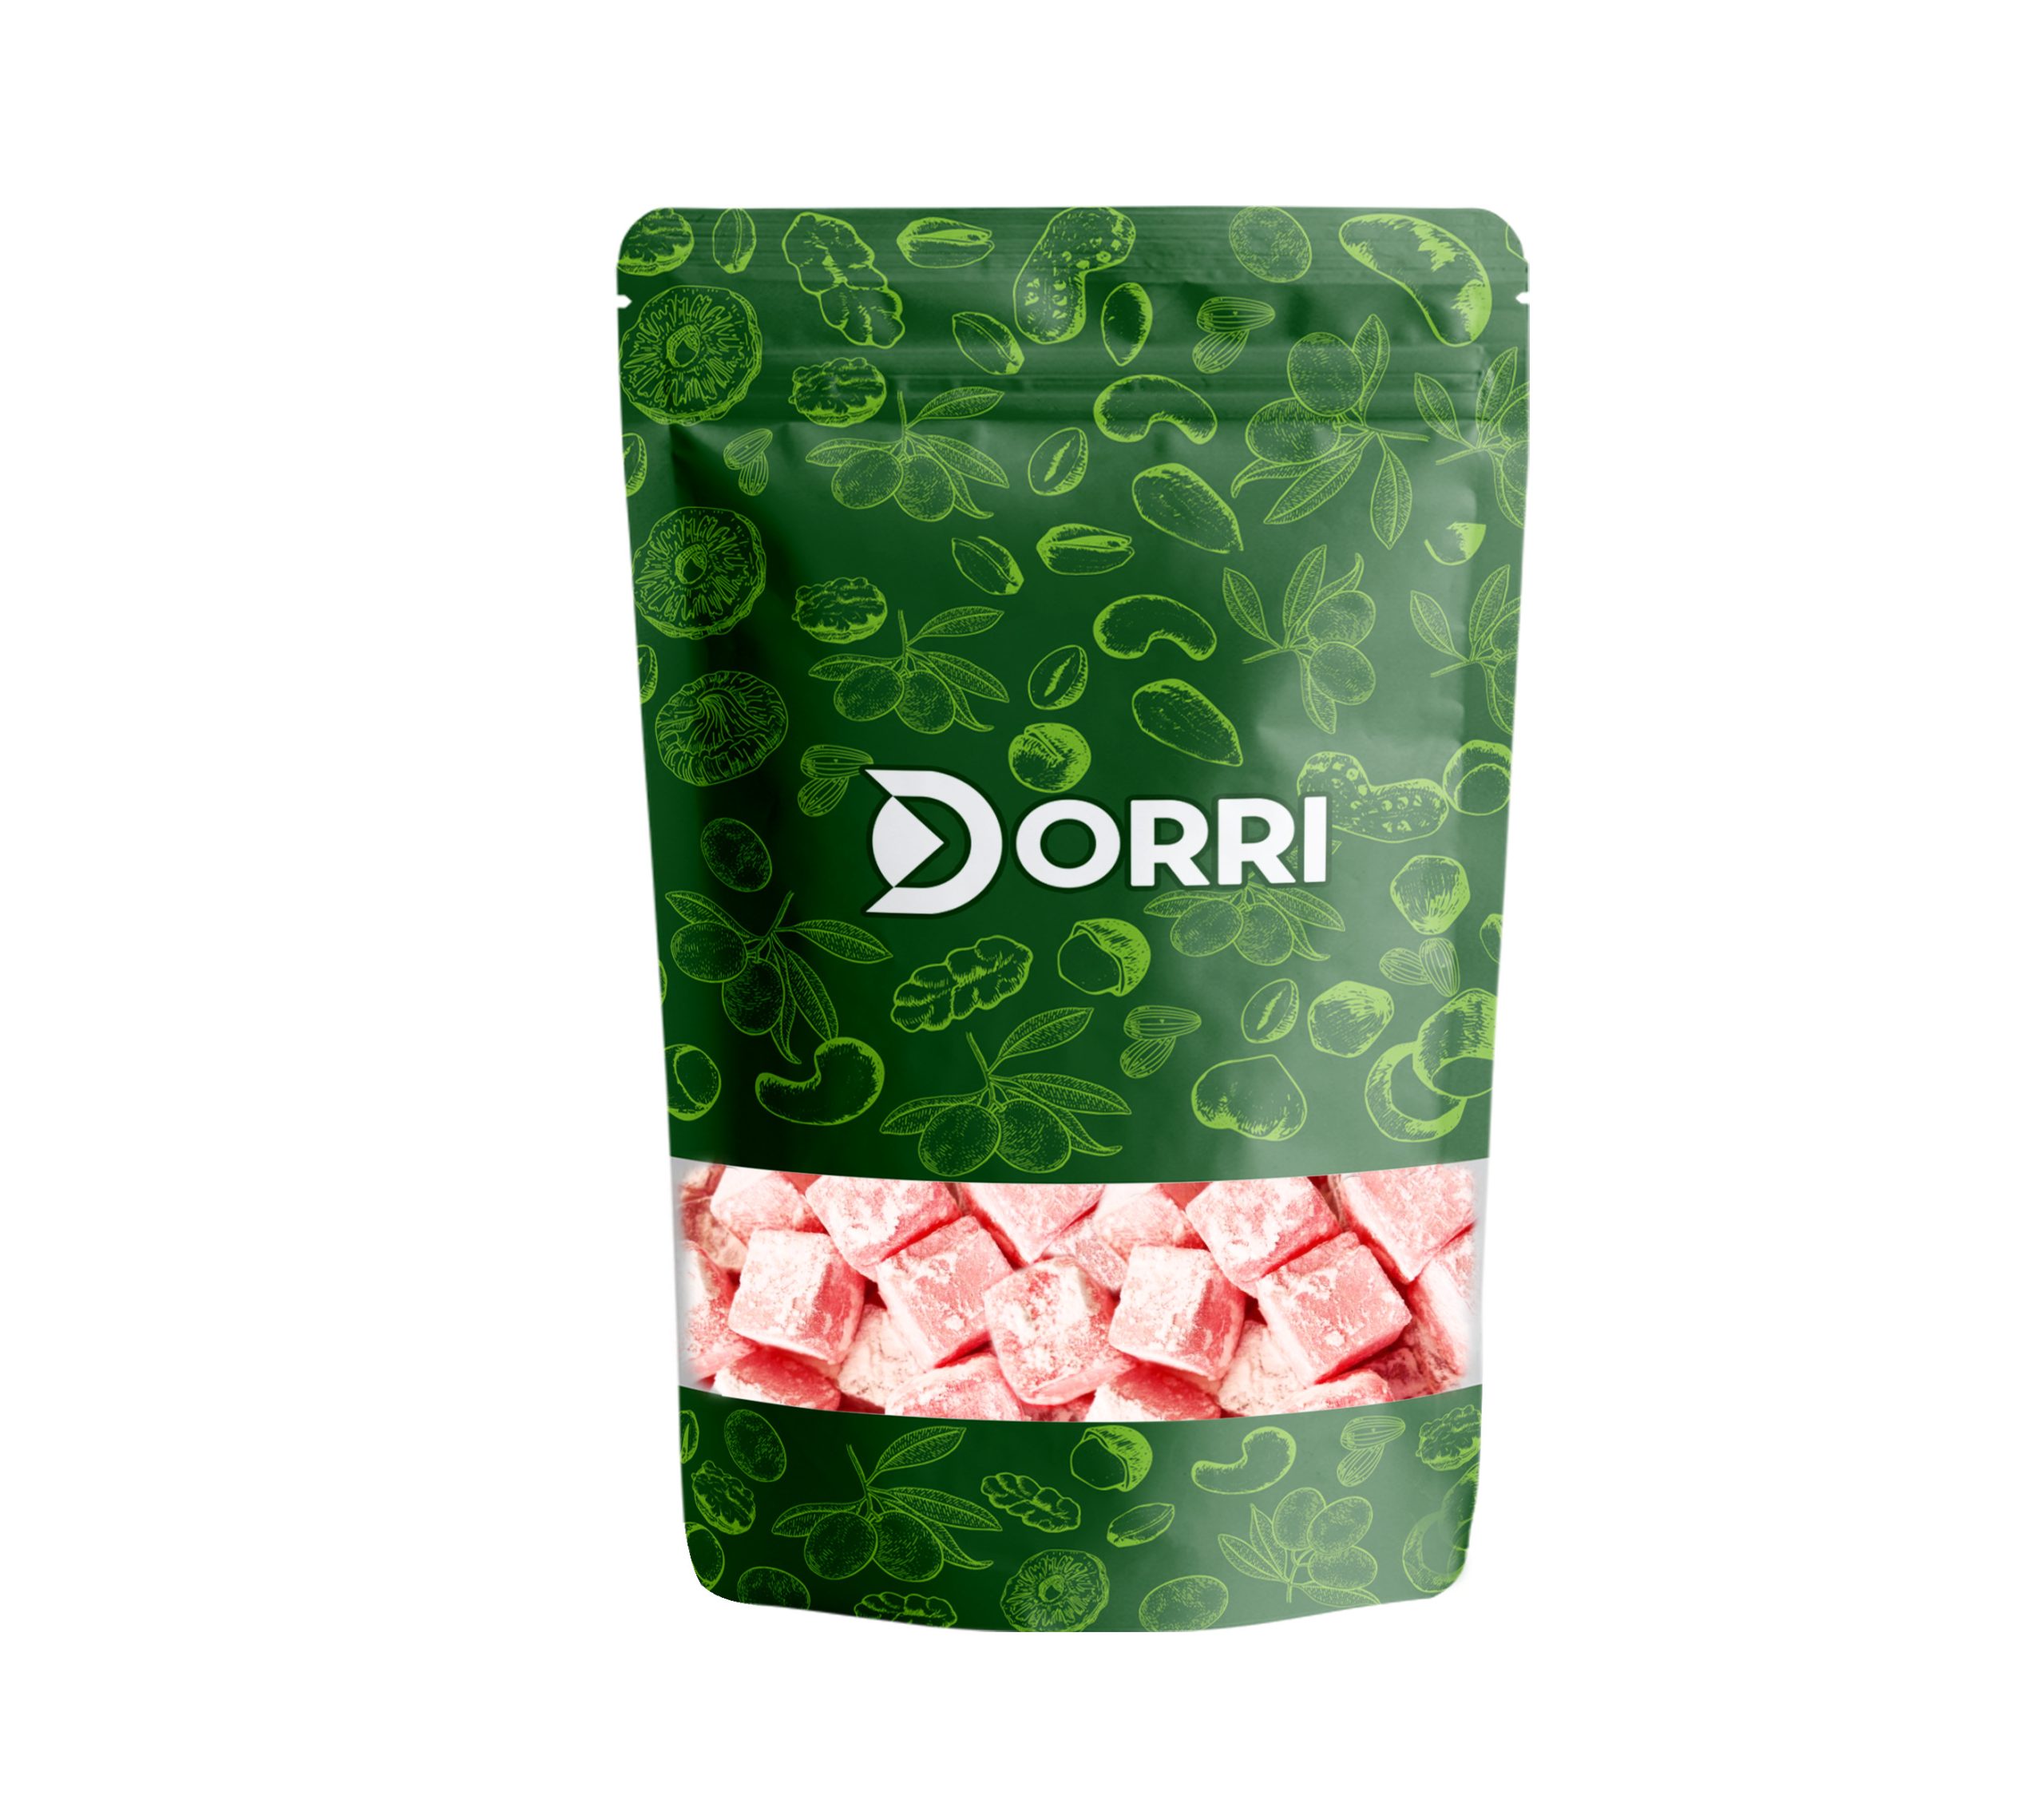 Dorri - Turkish Delight Cherry